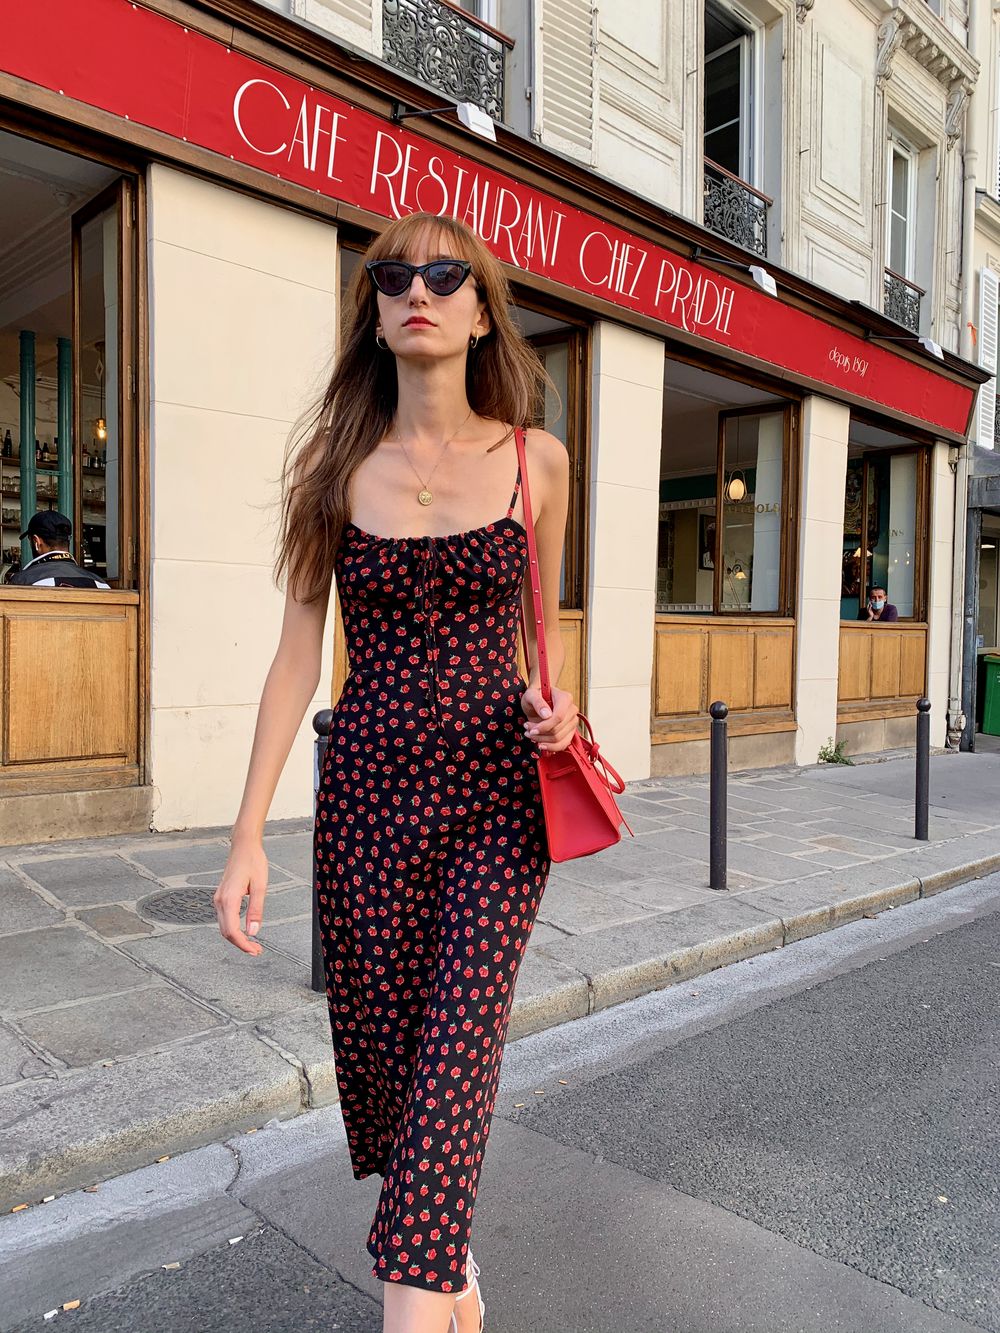 Realisation Par Alba Rosalita Dress in Paris - International Brands French Girls Love